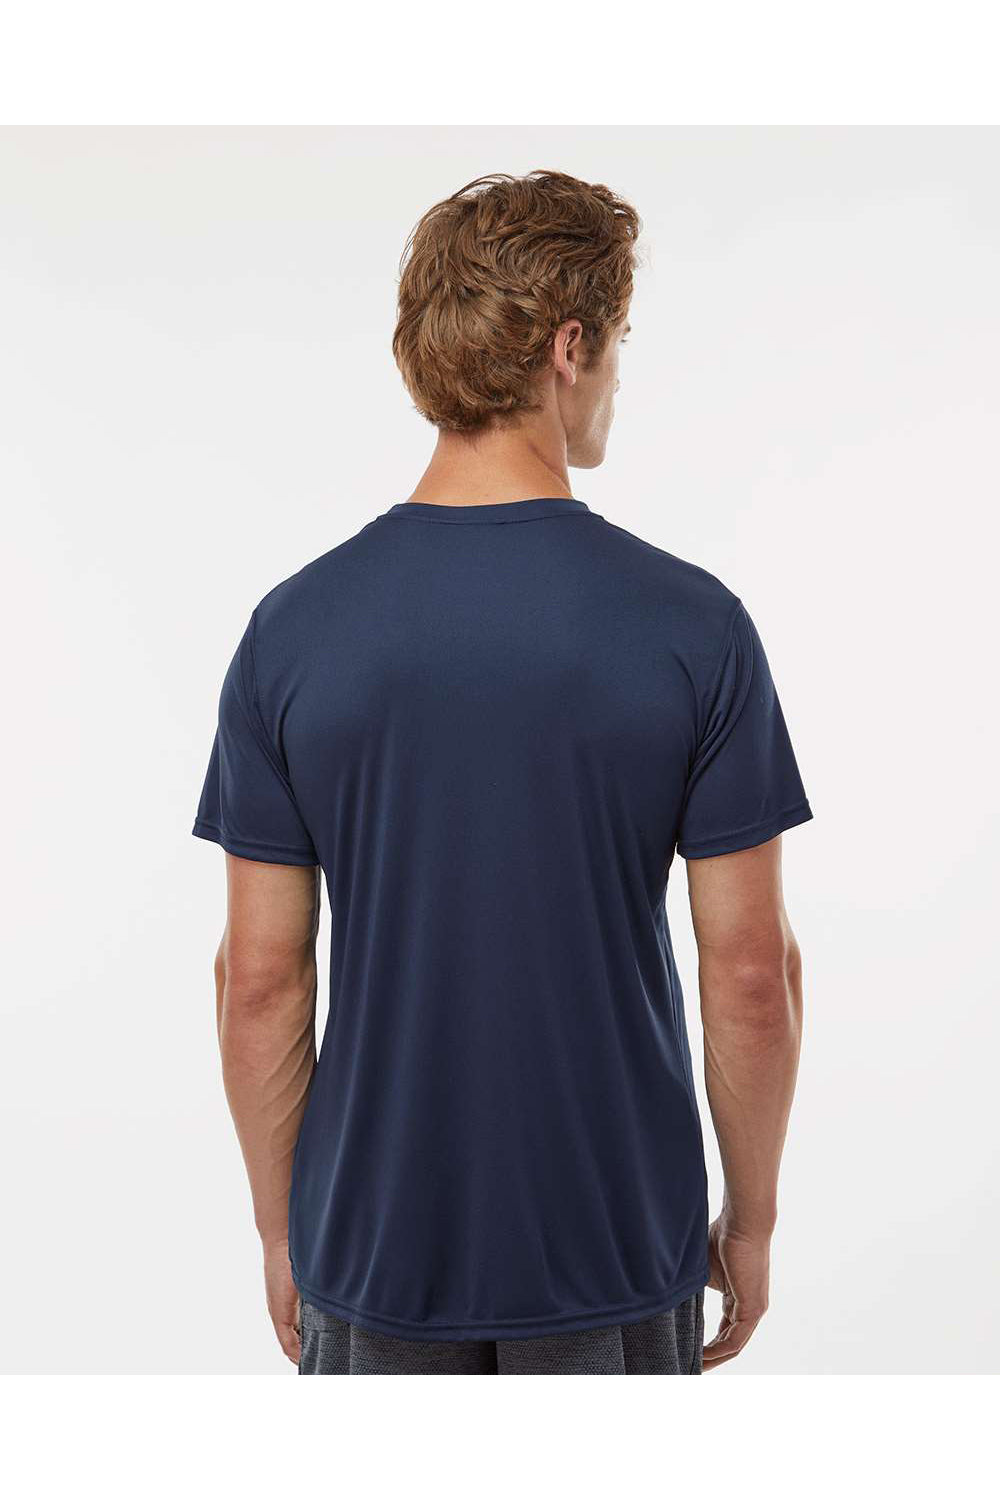 Holloway 222818 Mens Momentum Short Sleeve Crewneck T-Shirt Navy Blue Model Back